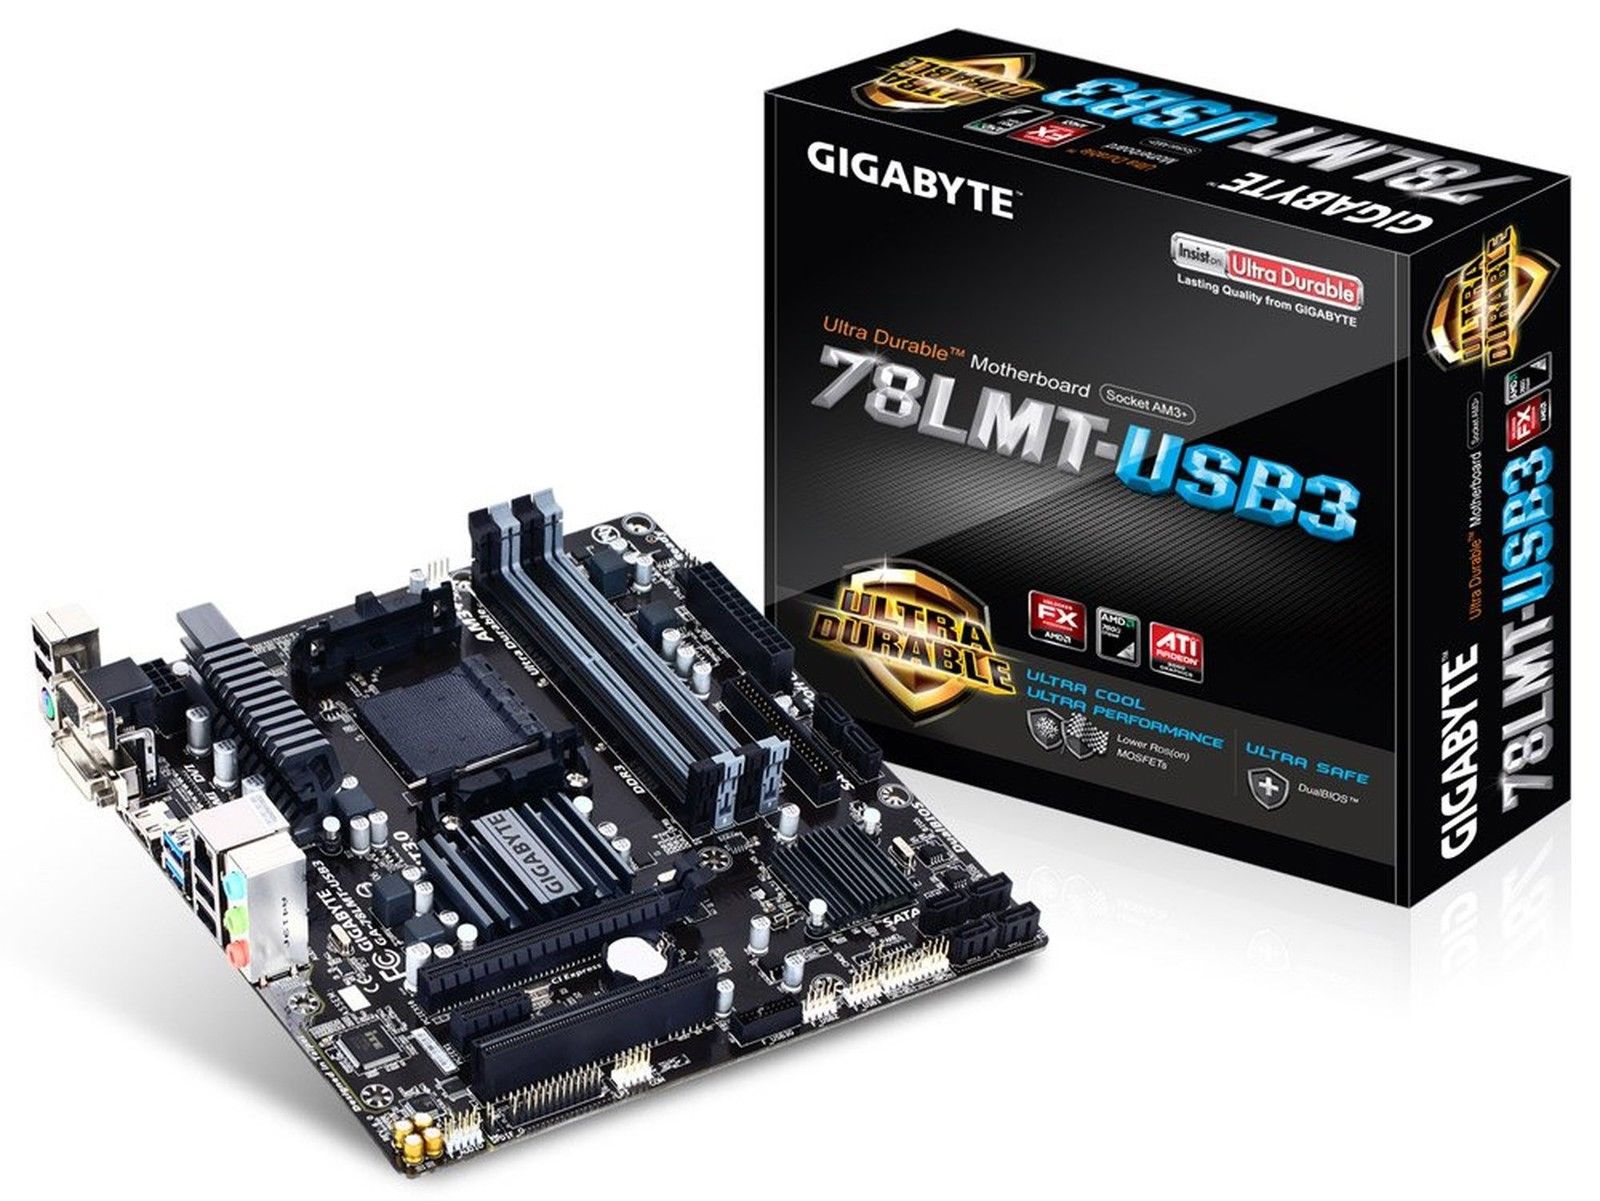 Gigabyte 78LMT-USB3 DDR3 AM3+ mATX Motherboard AMD VGA USB 3.0 DVI HDMI